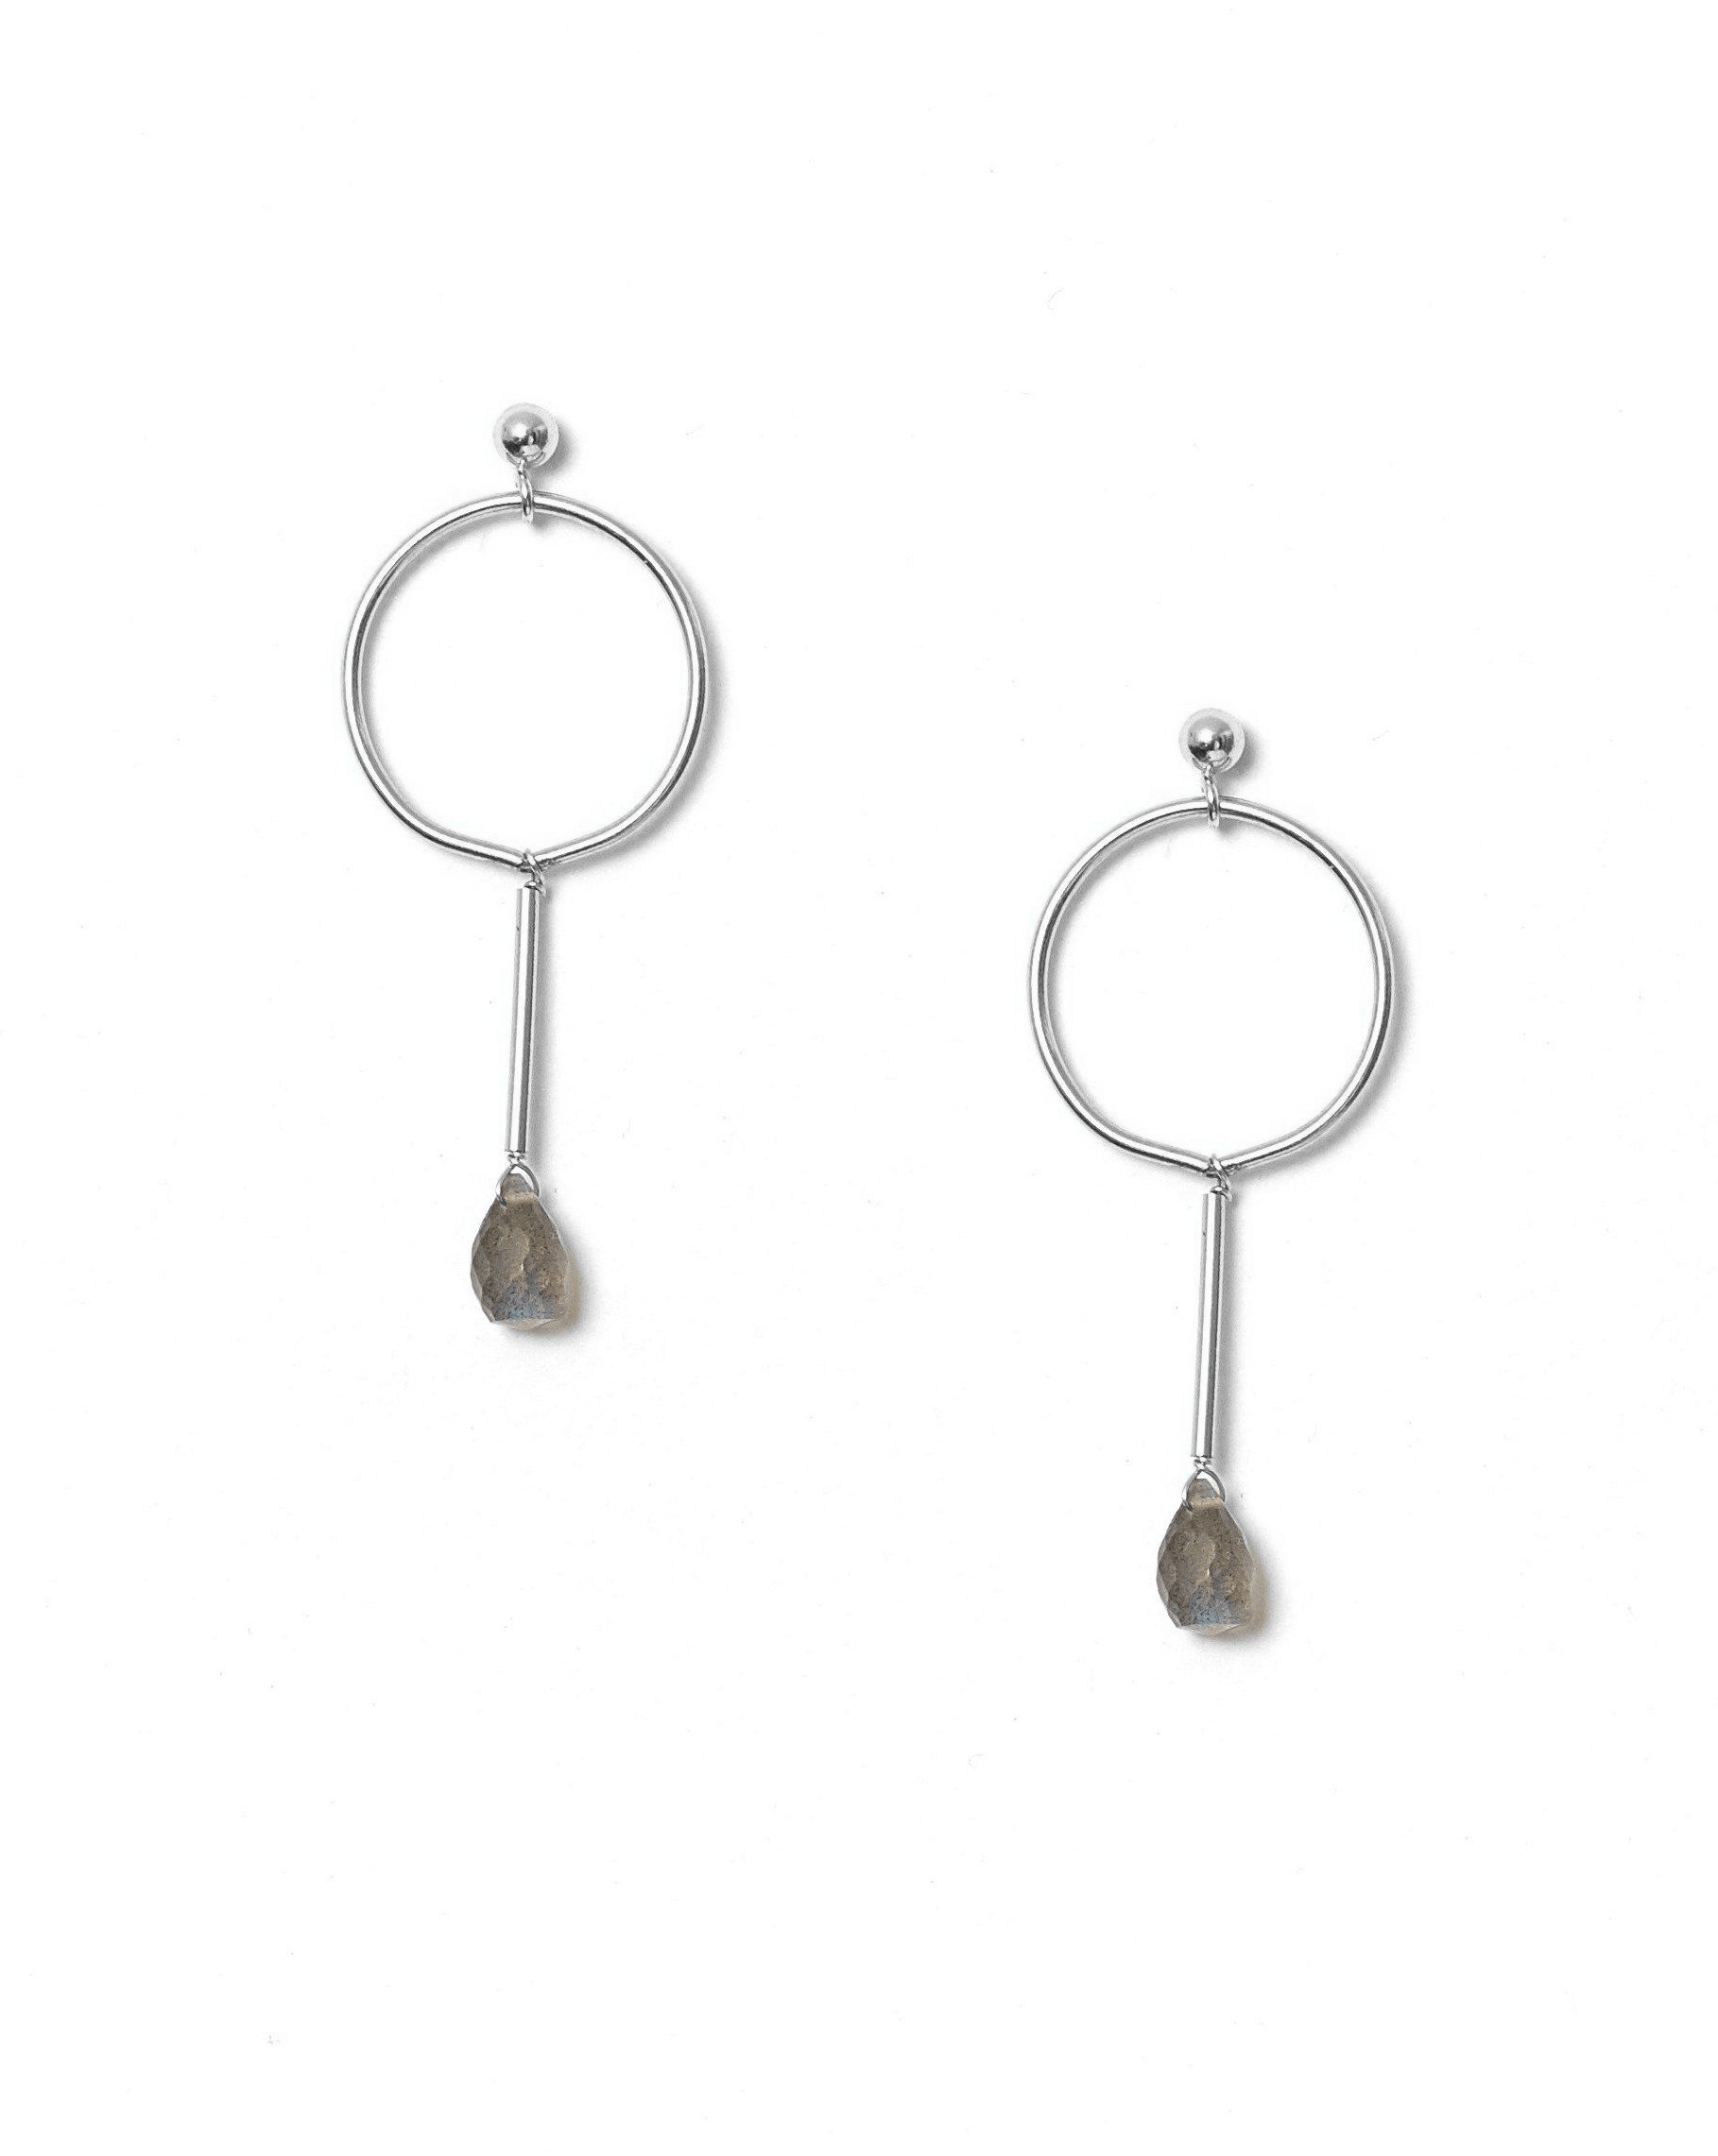 Osea Earrings by KOZAKH. Ball stud drop earrings in Sterling Silver, featuring a faceted Labradorite droplet.